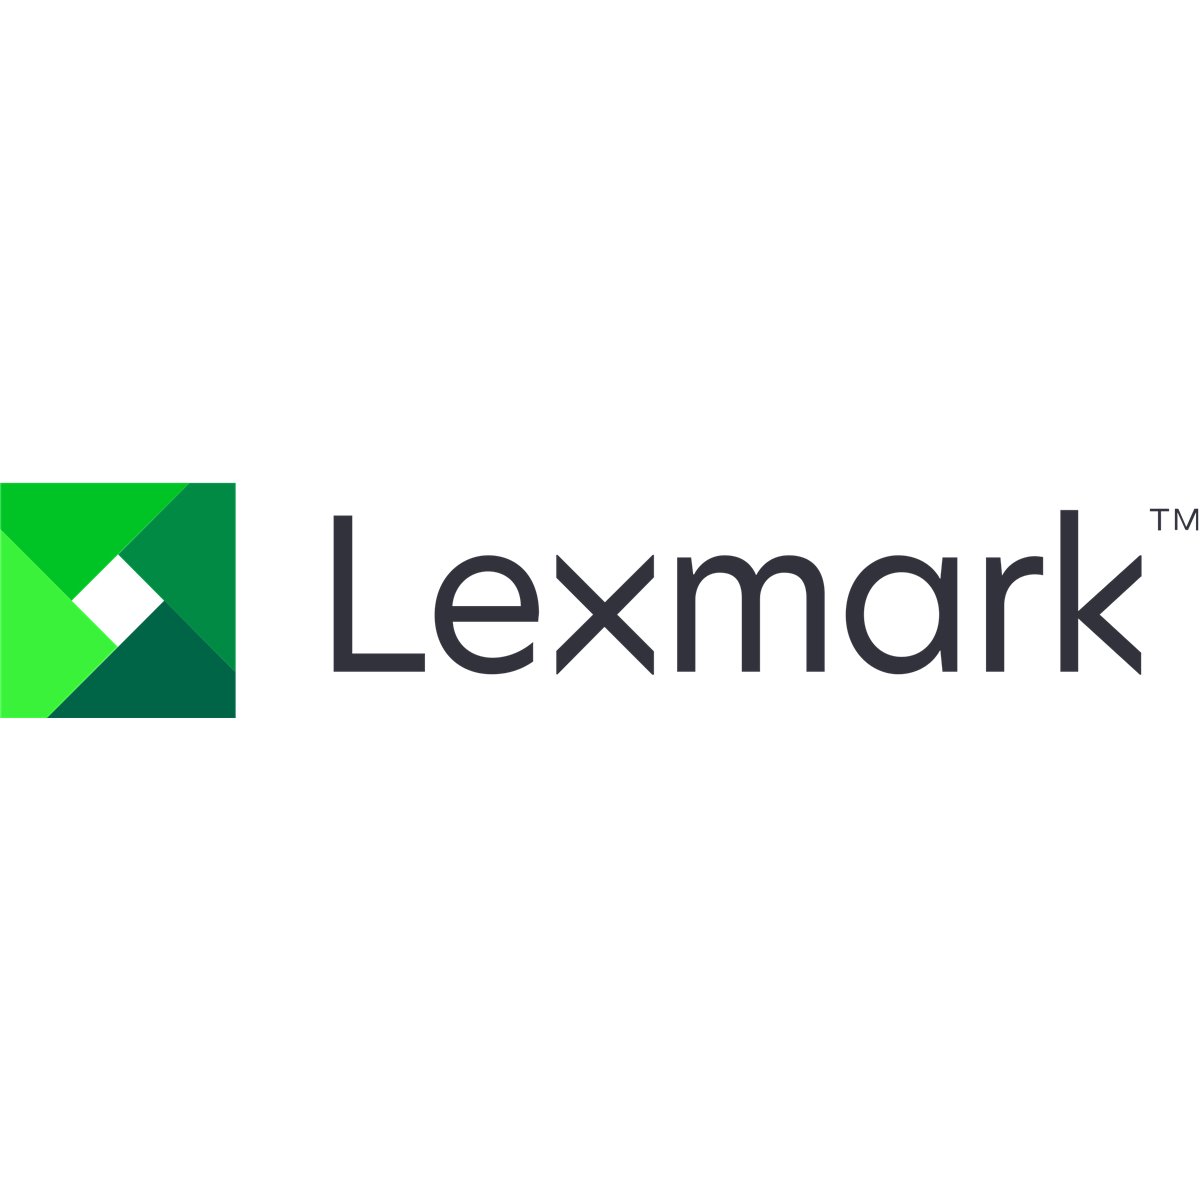 Lexmark OPTION Duplex ASM 250 - 250 sheet